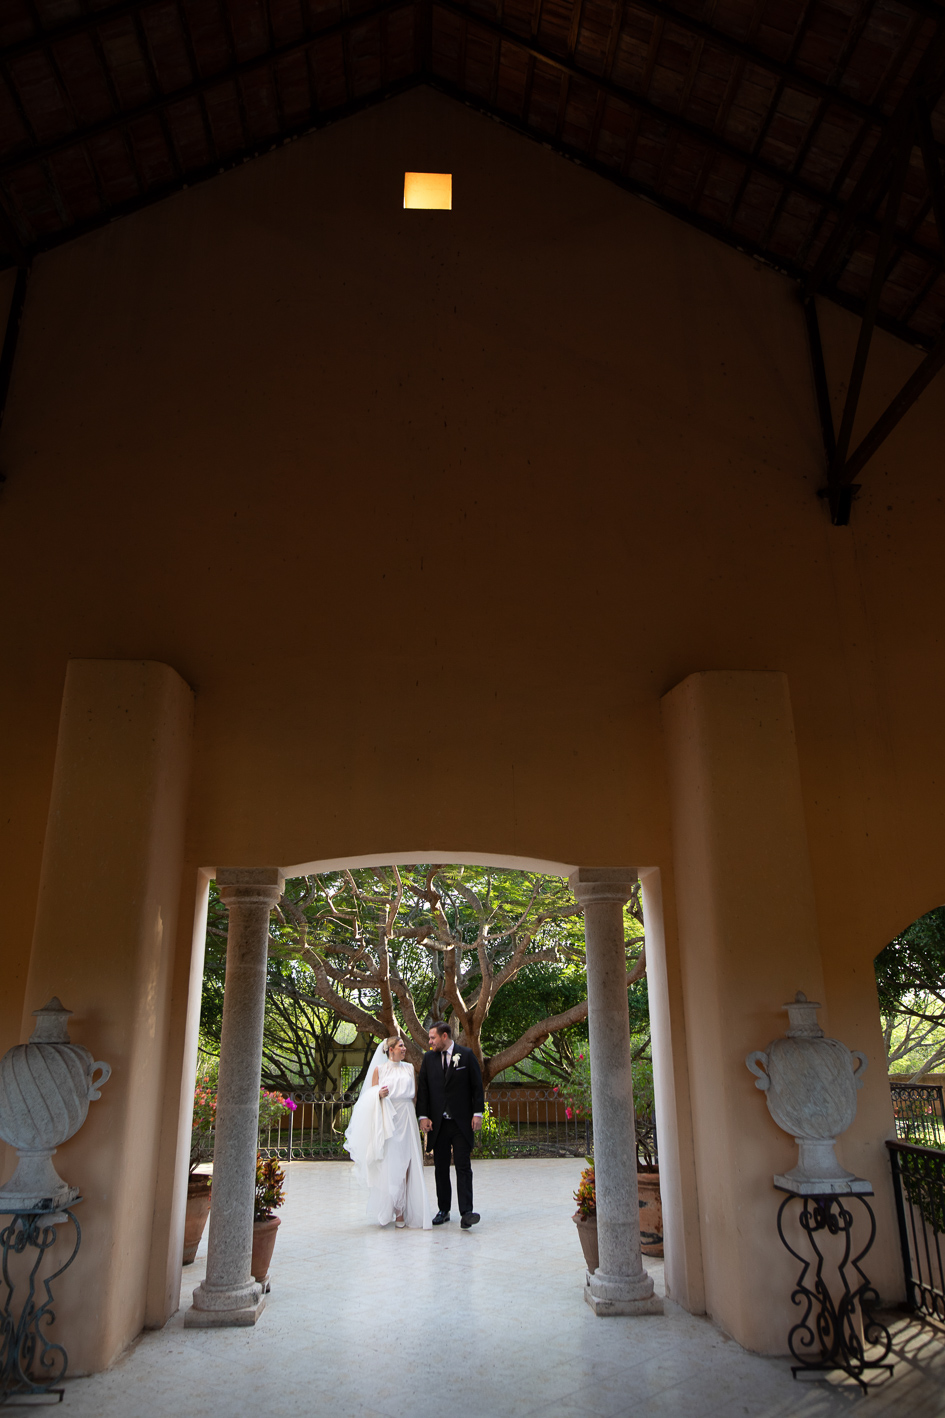  merida wedding photographer_hacienda xtepen0045 Merida wedding photographs, a beautiful day at Hacienda Xtepen  